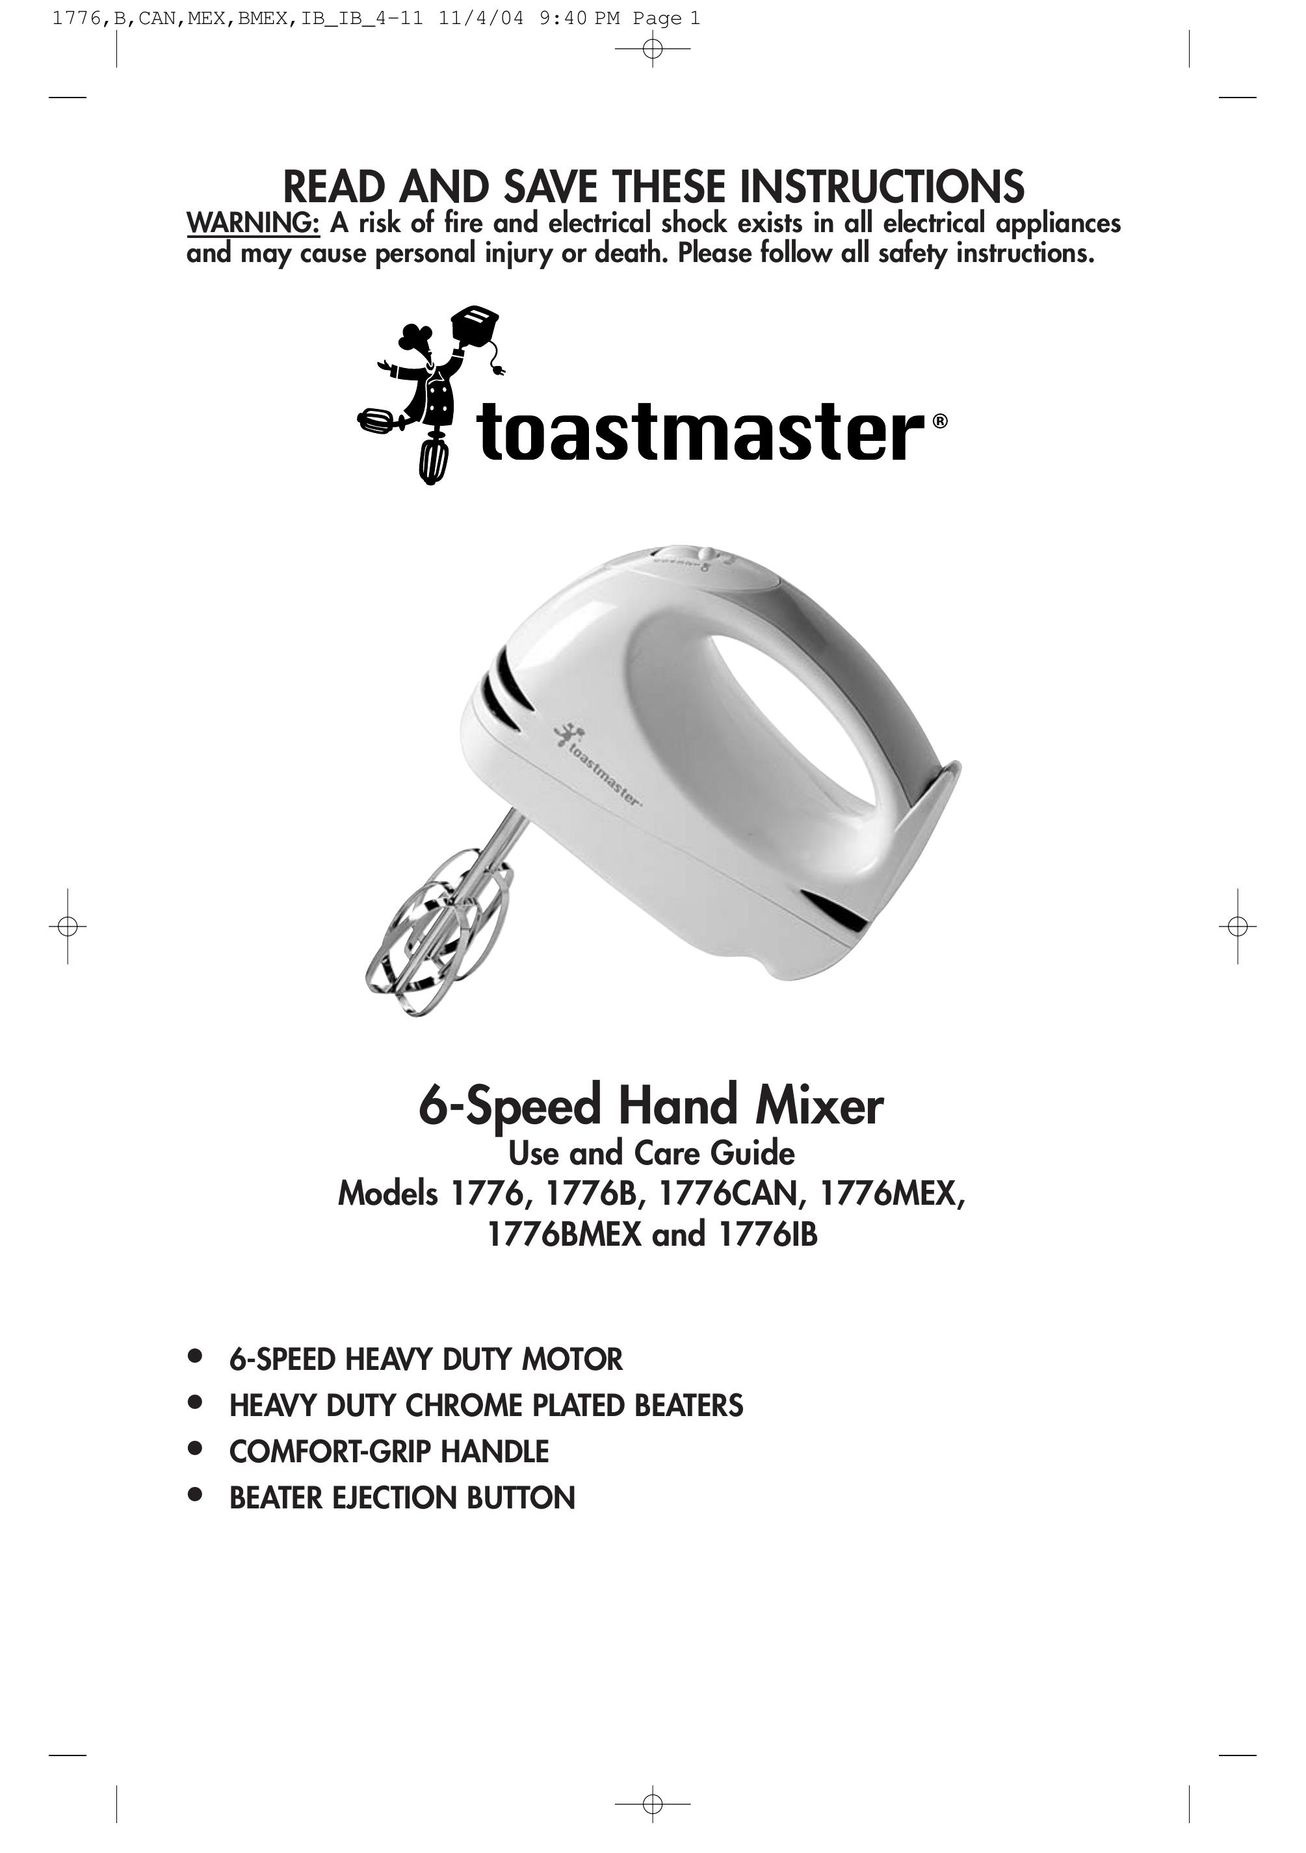 Toastmaster 1776MEX Mixer User Manual